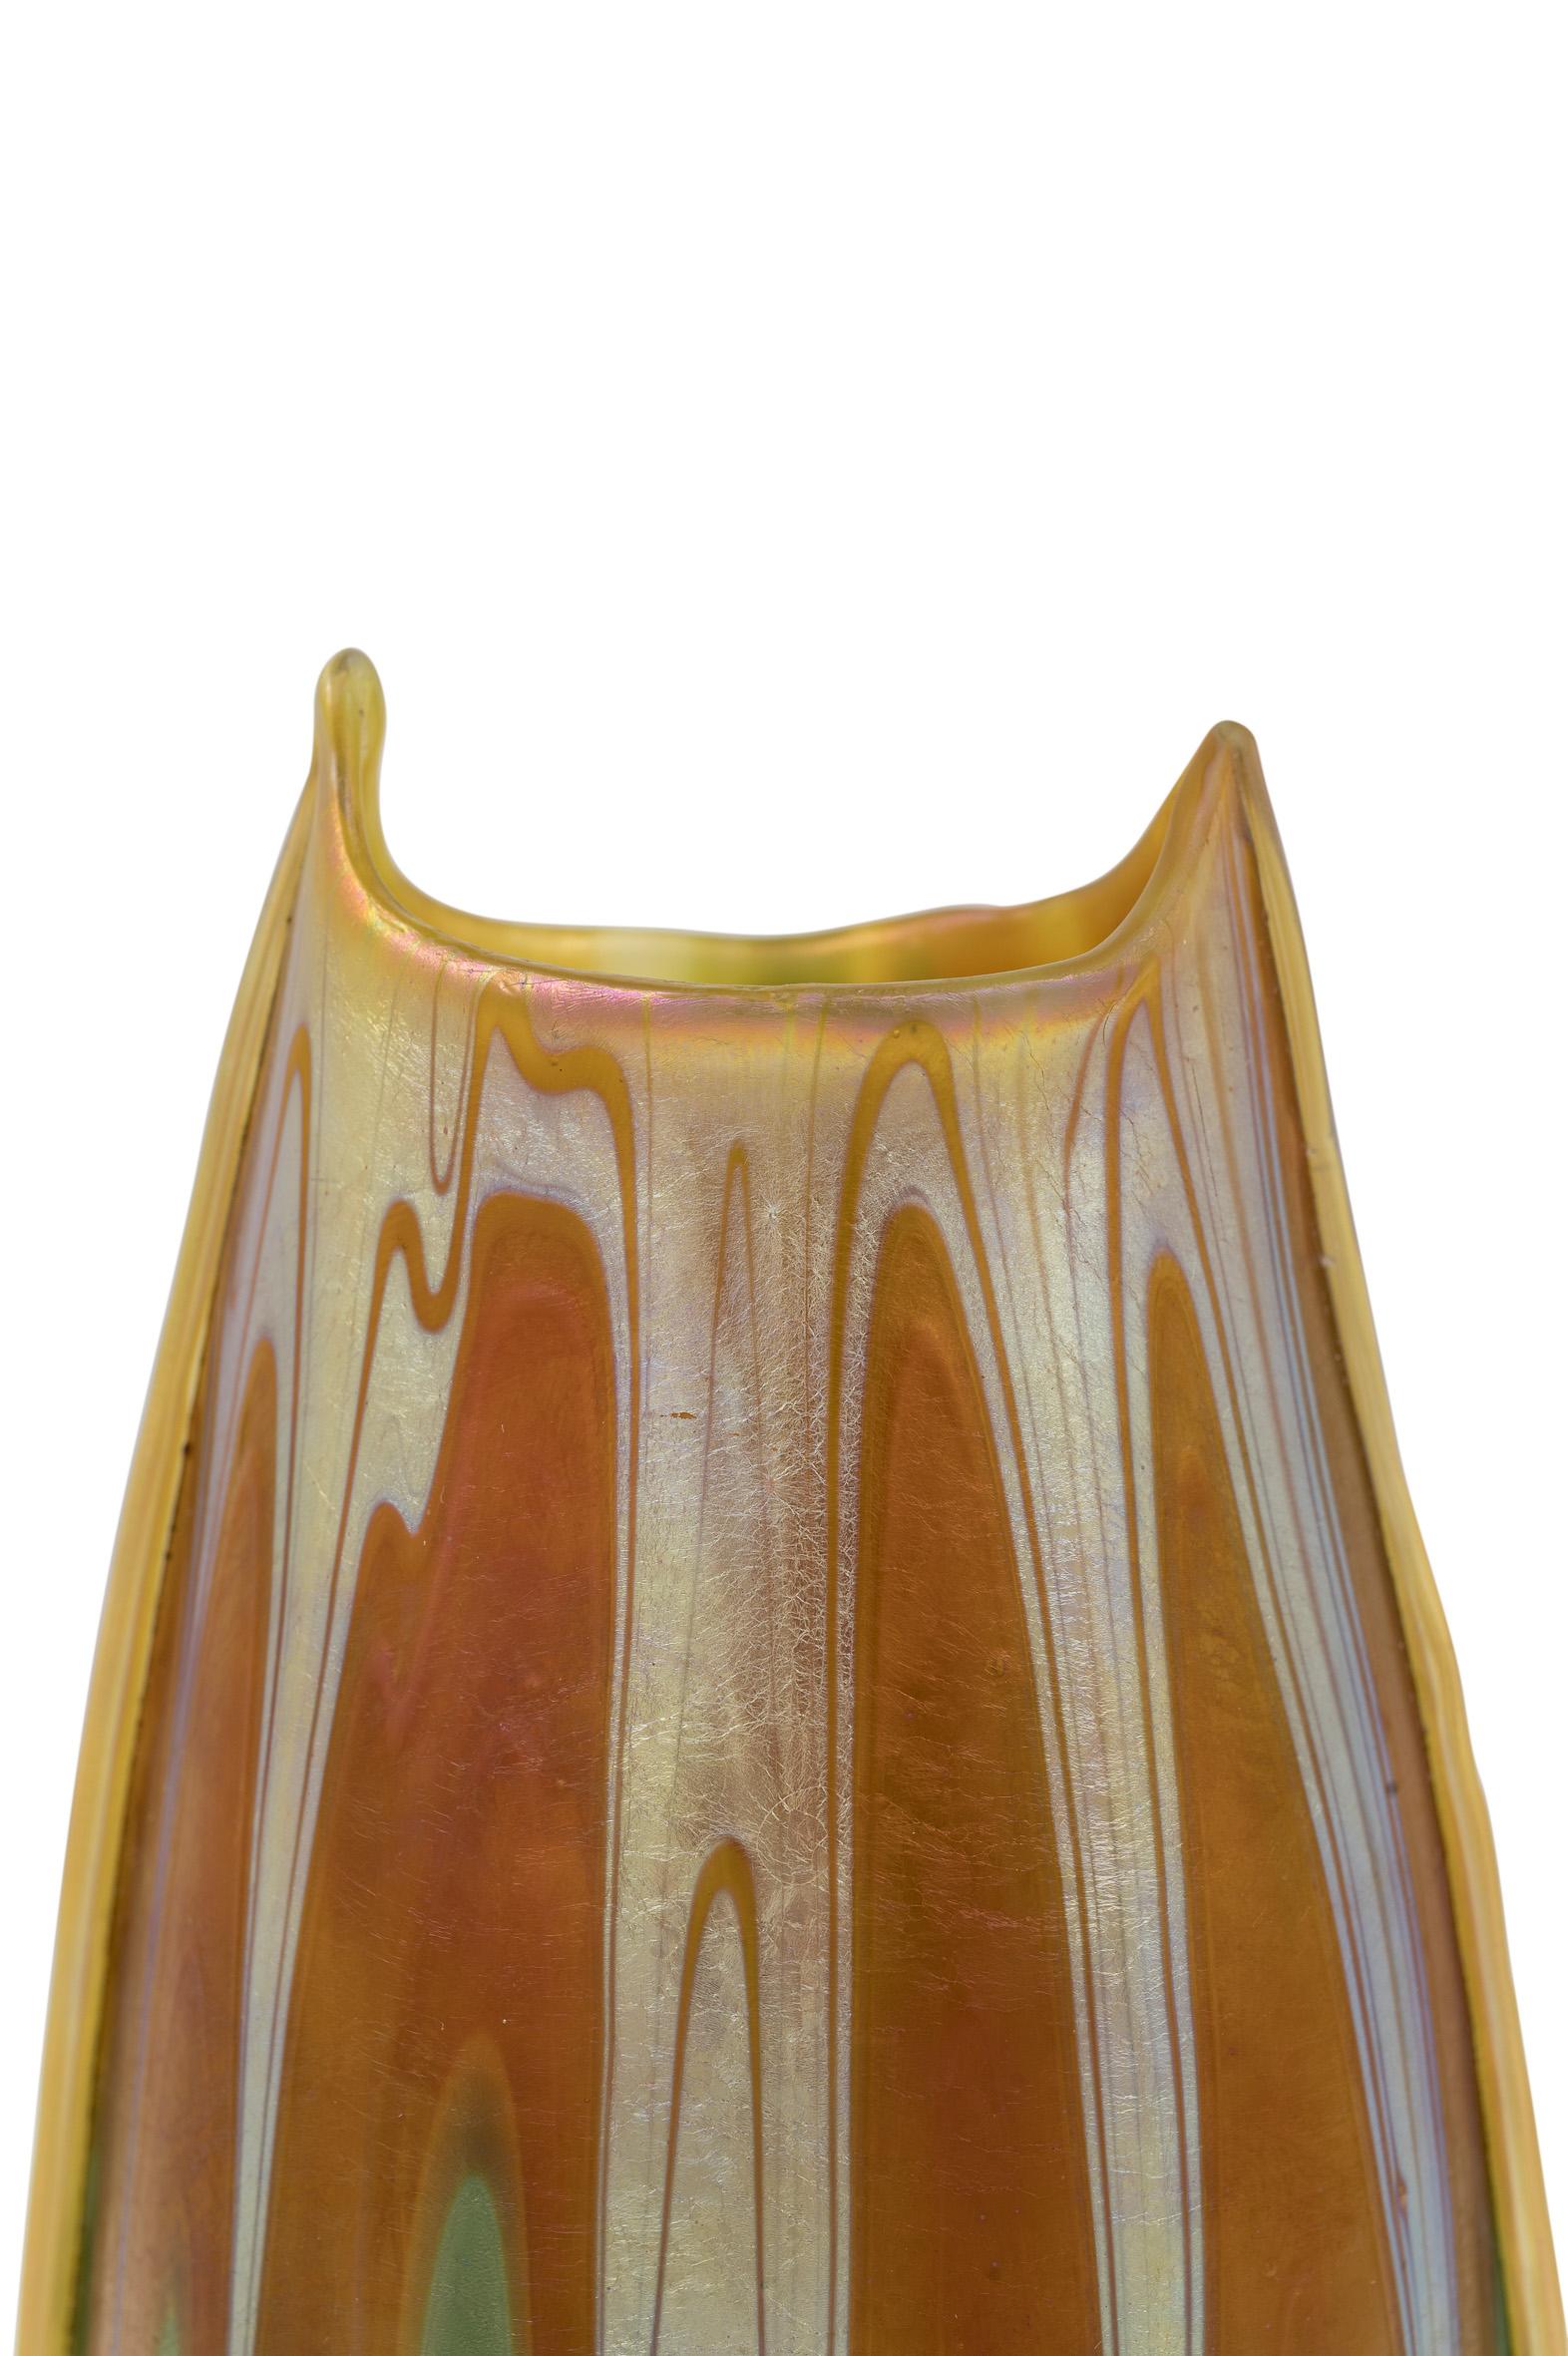 Austrian Glass Vase Loetz Franz Hofstötter, circa 1901 For Sale